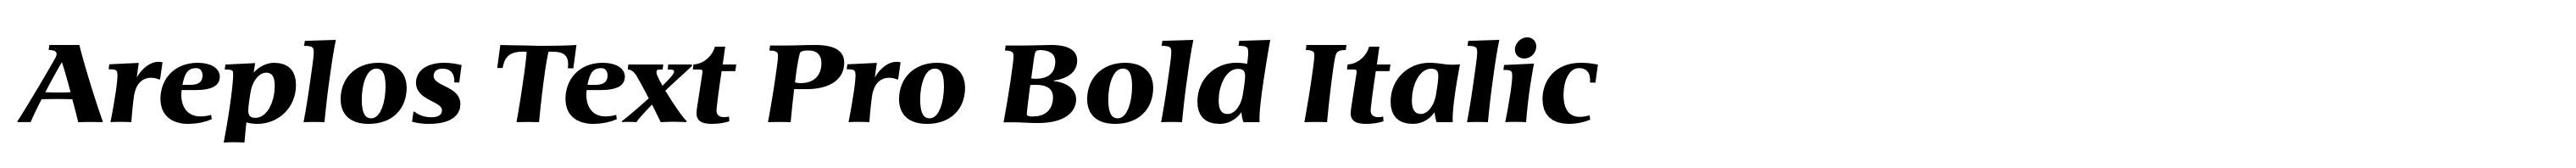 Areplos Text Pro Bold Italic